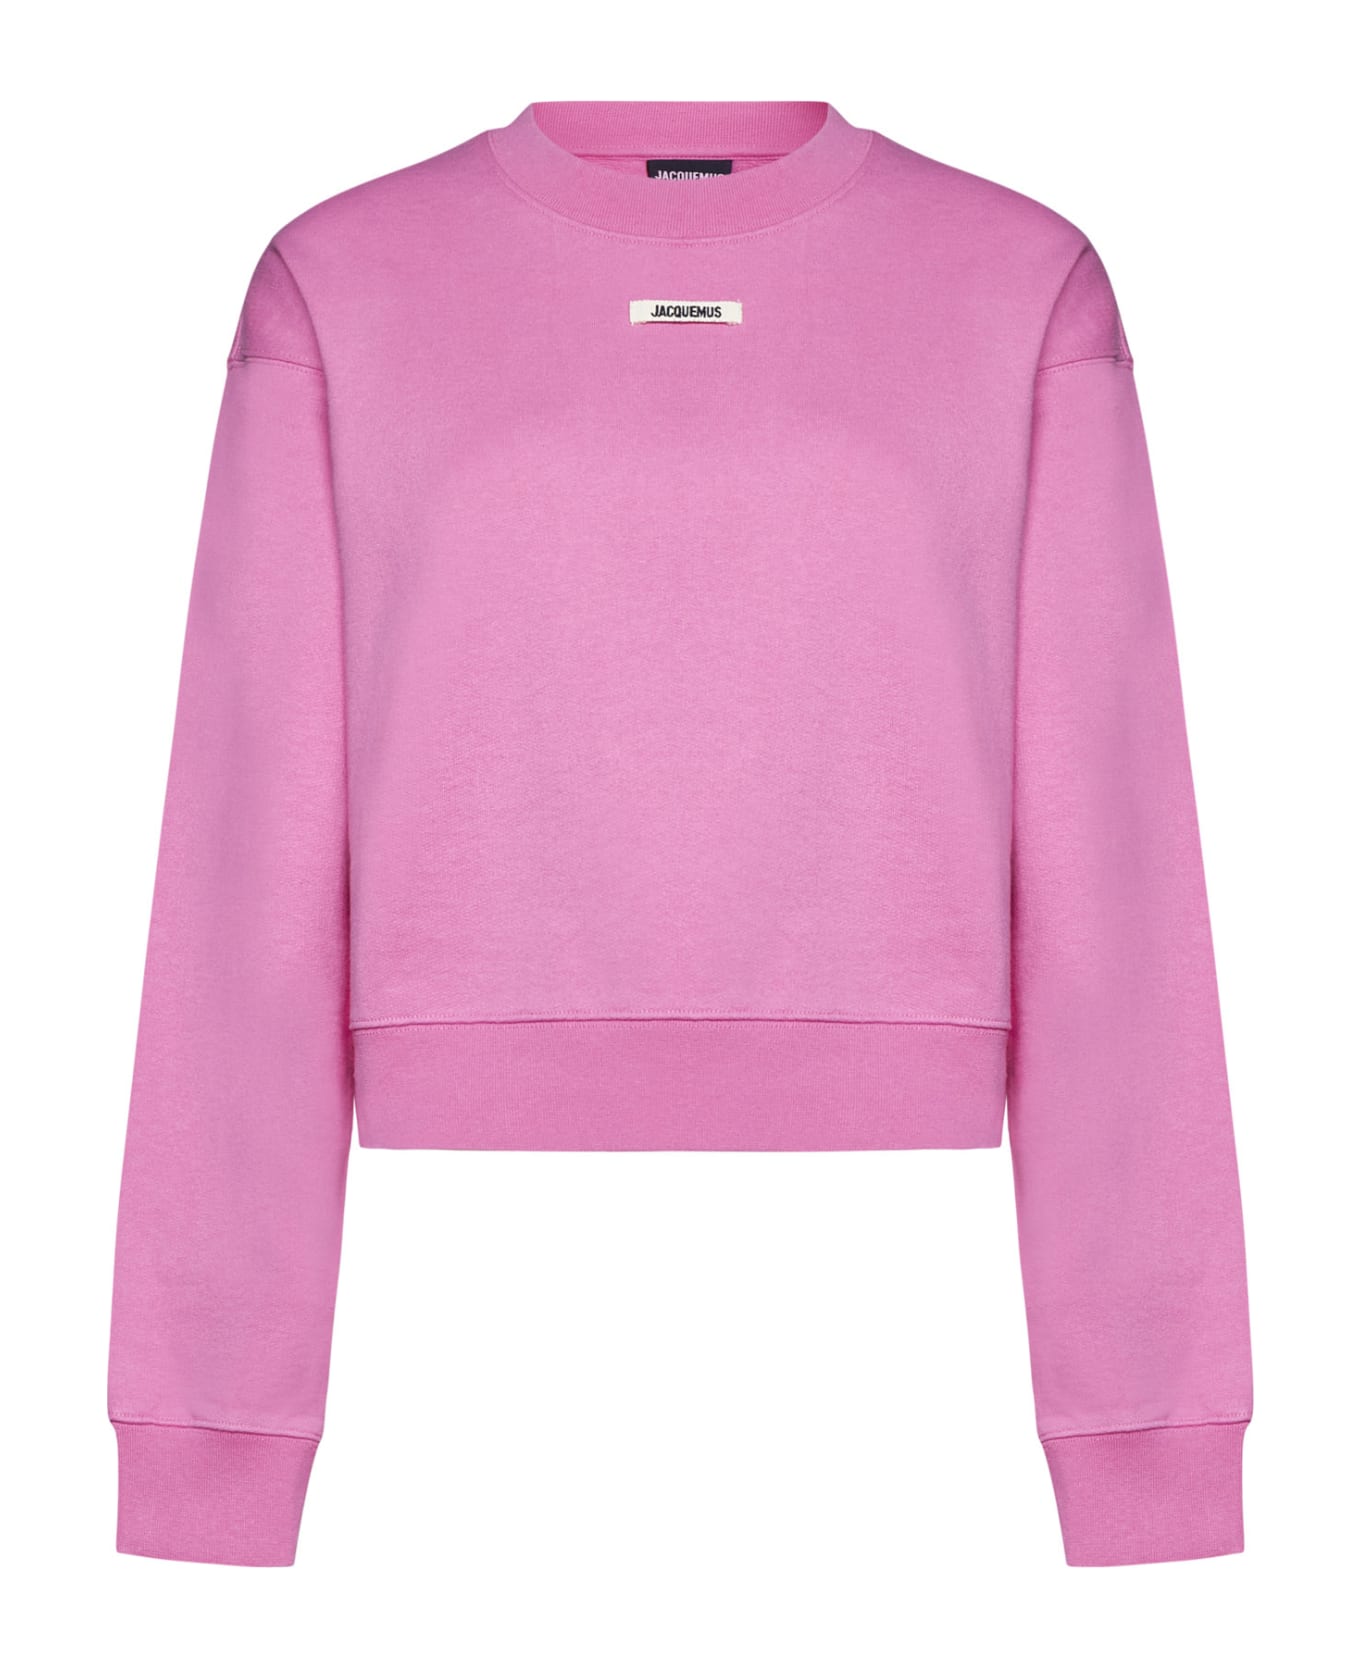 Jacquemus Sweater - Pink 2